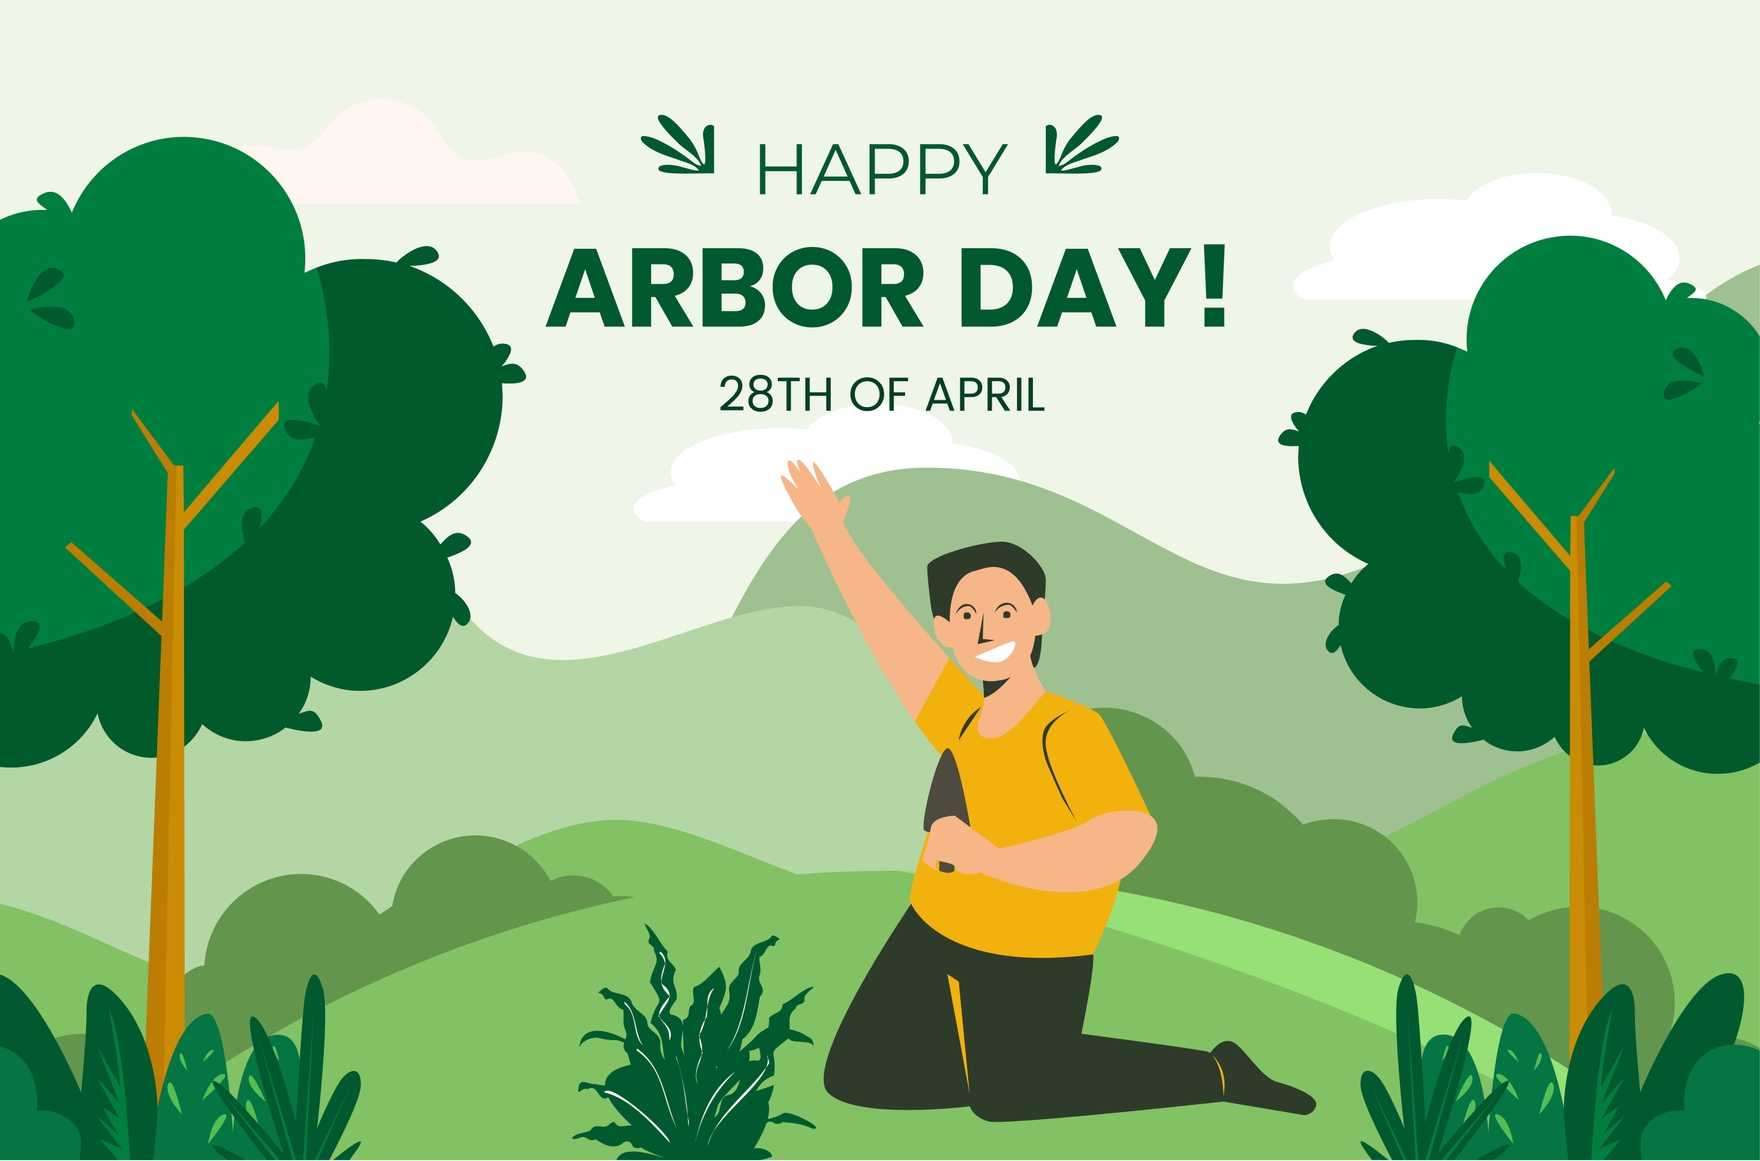 Free Arbor Day Banner in Illustrator, PSD, EPS, SVG, PNG, JPEG